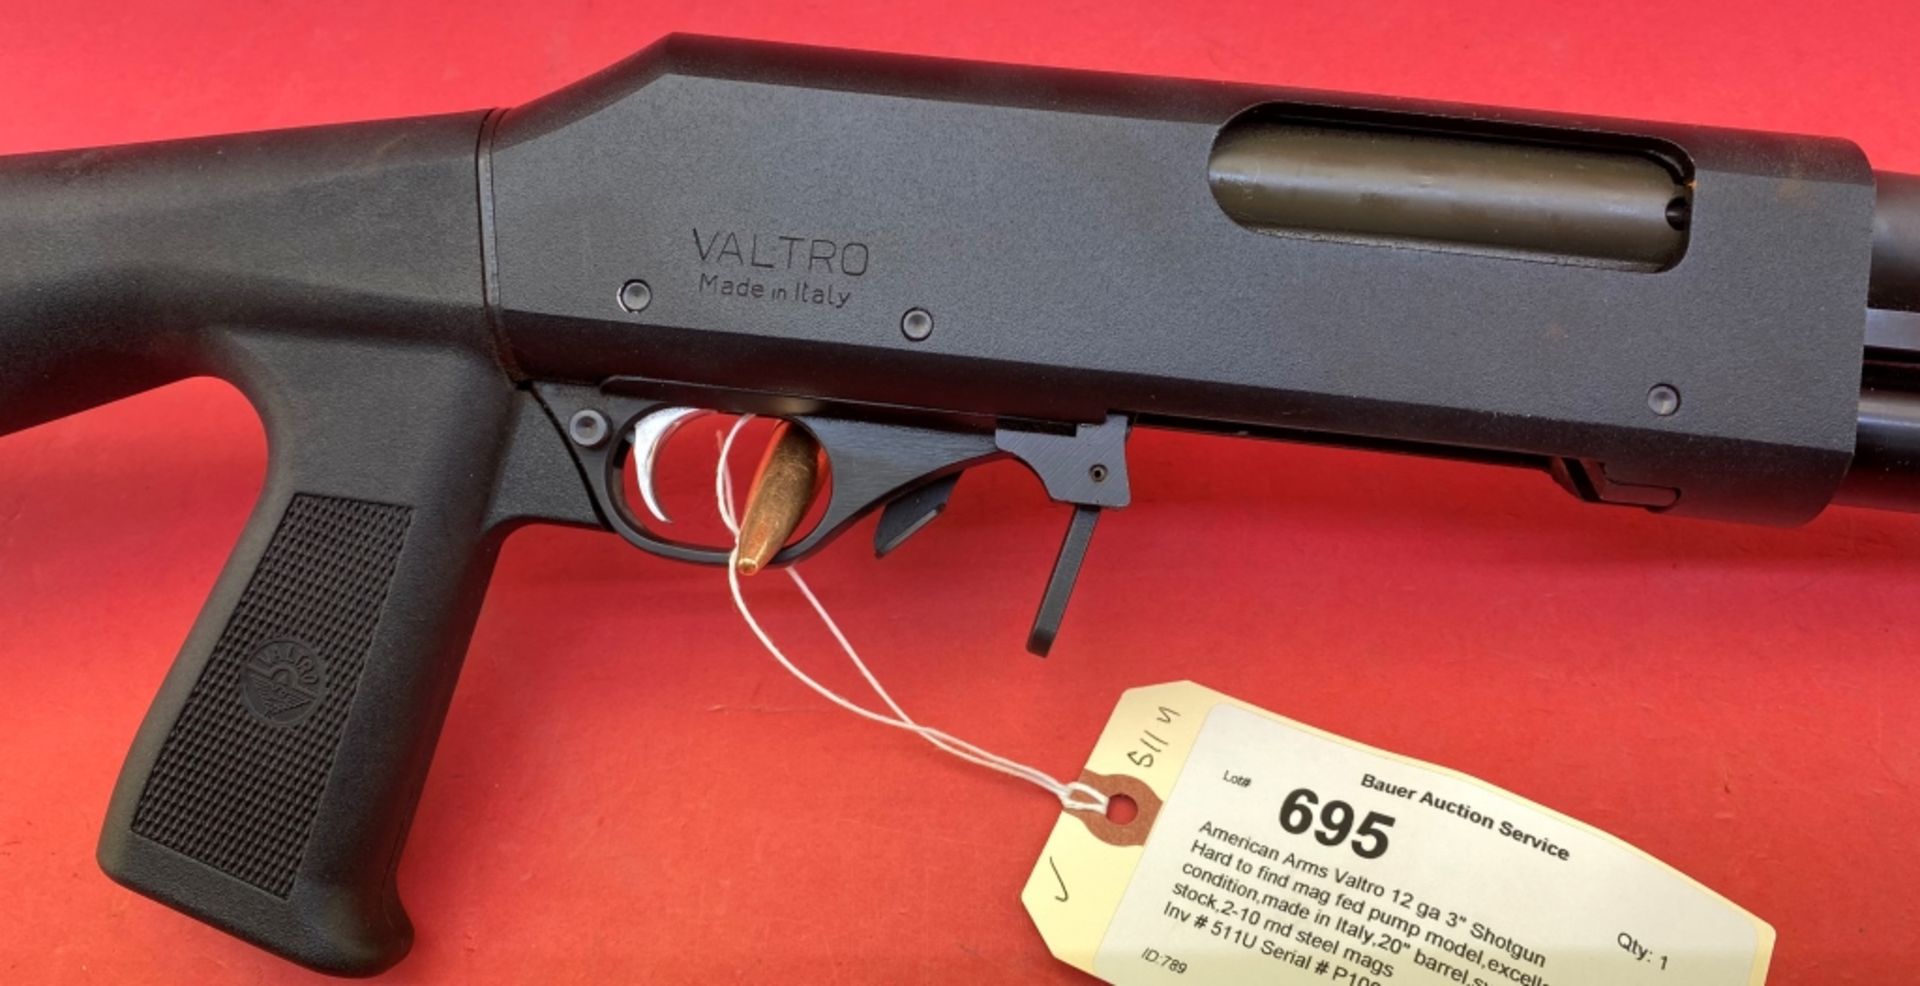 American Arms Valtro 12 ga 3"" Shotgun - Image 3 of 6